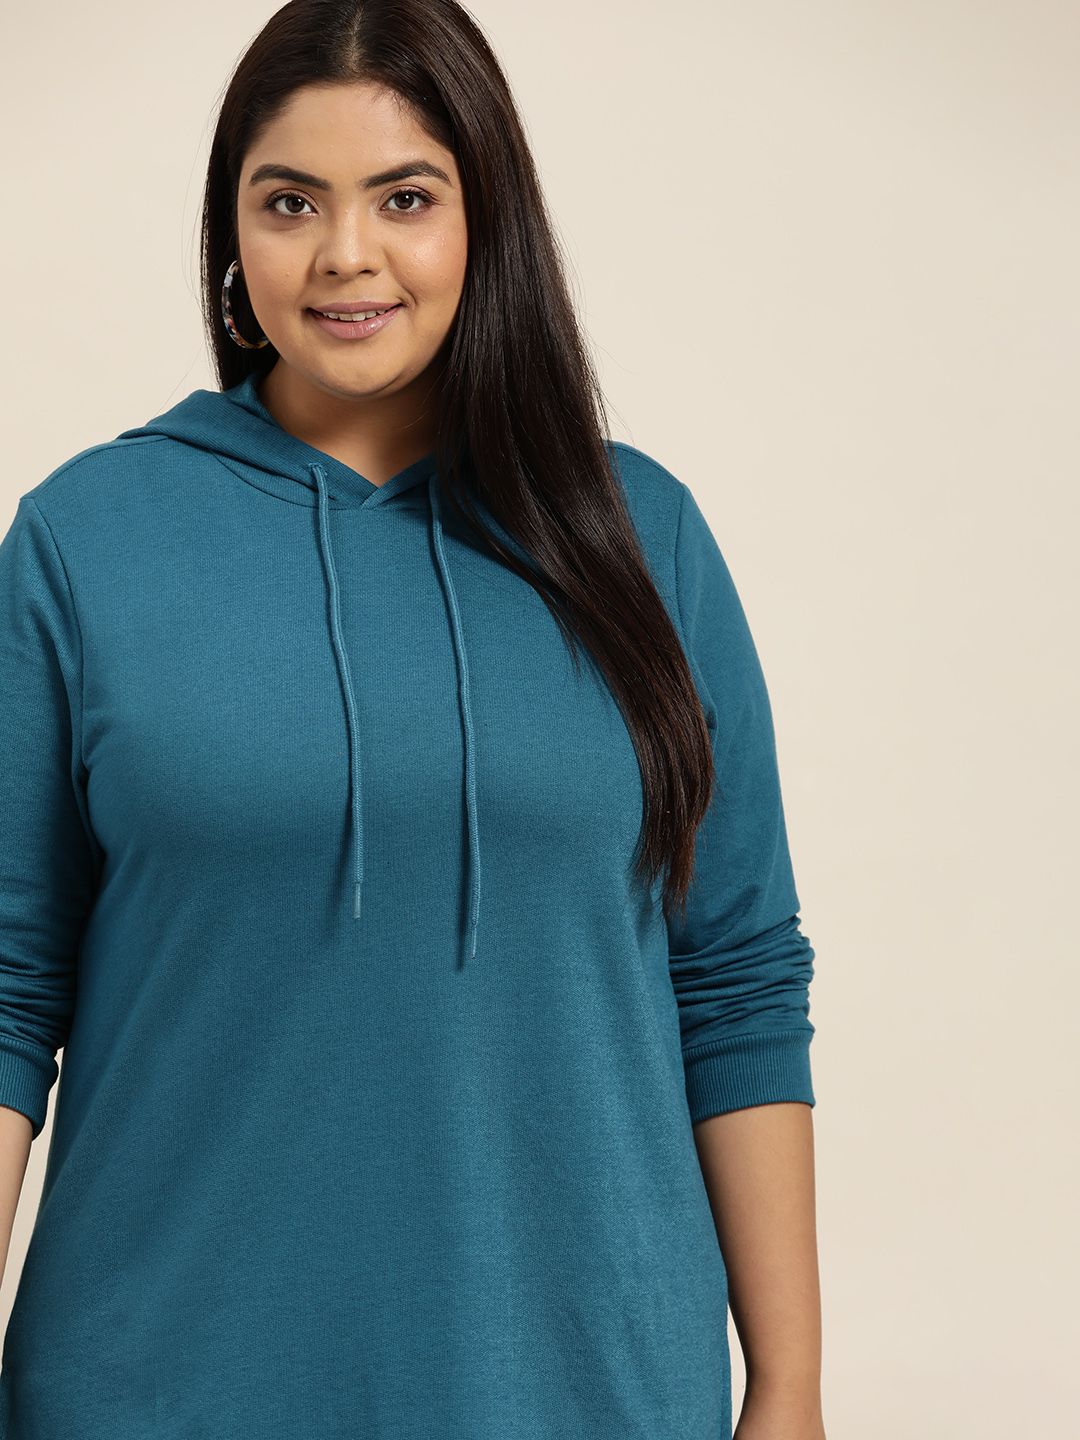 Sztori Women Plus Size Teal Blue Solid Hooded Sweatshirt Price in India